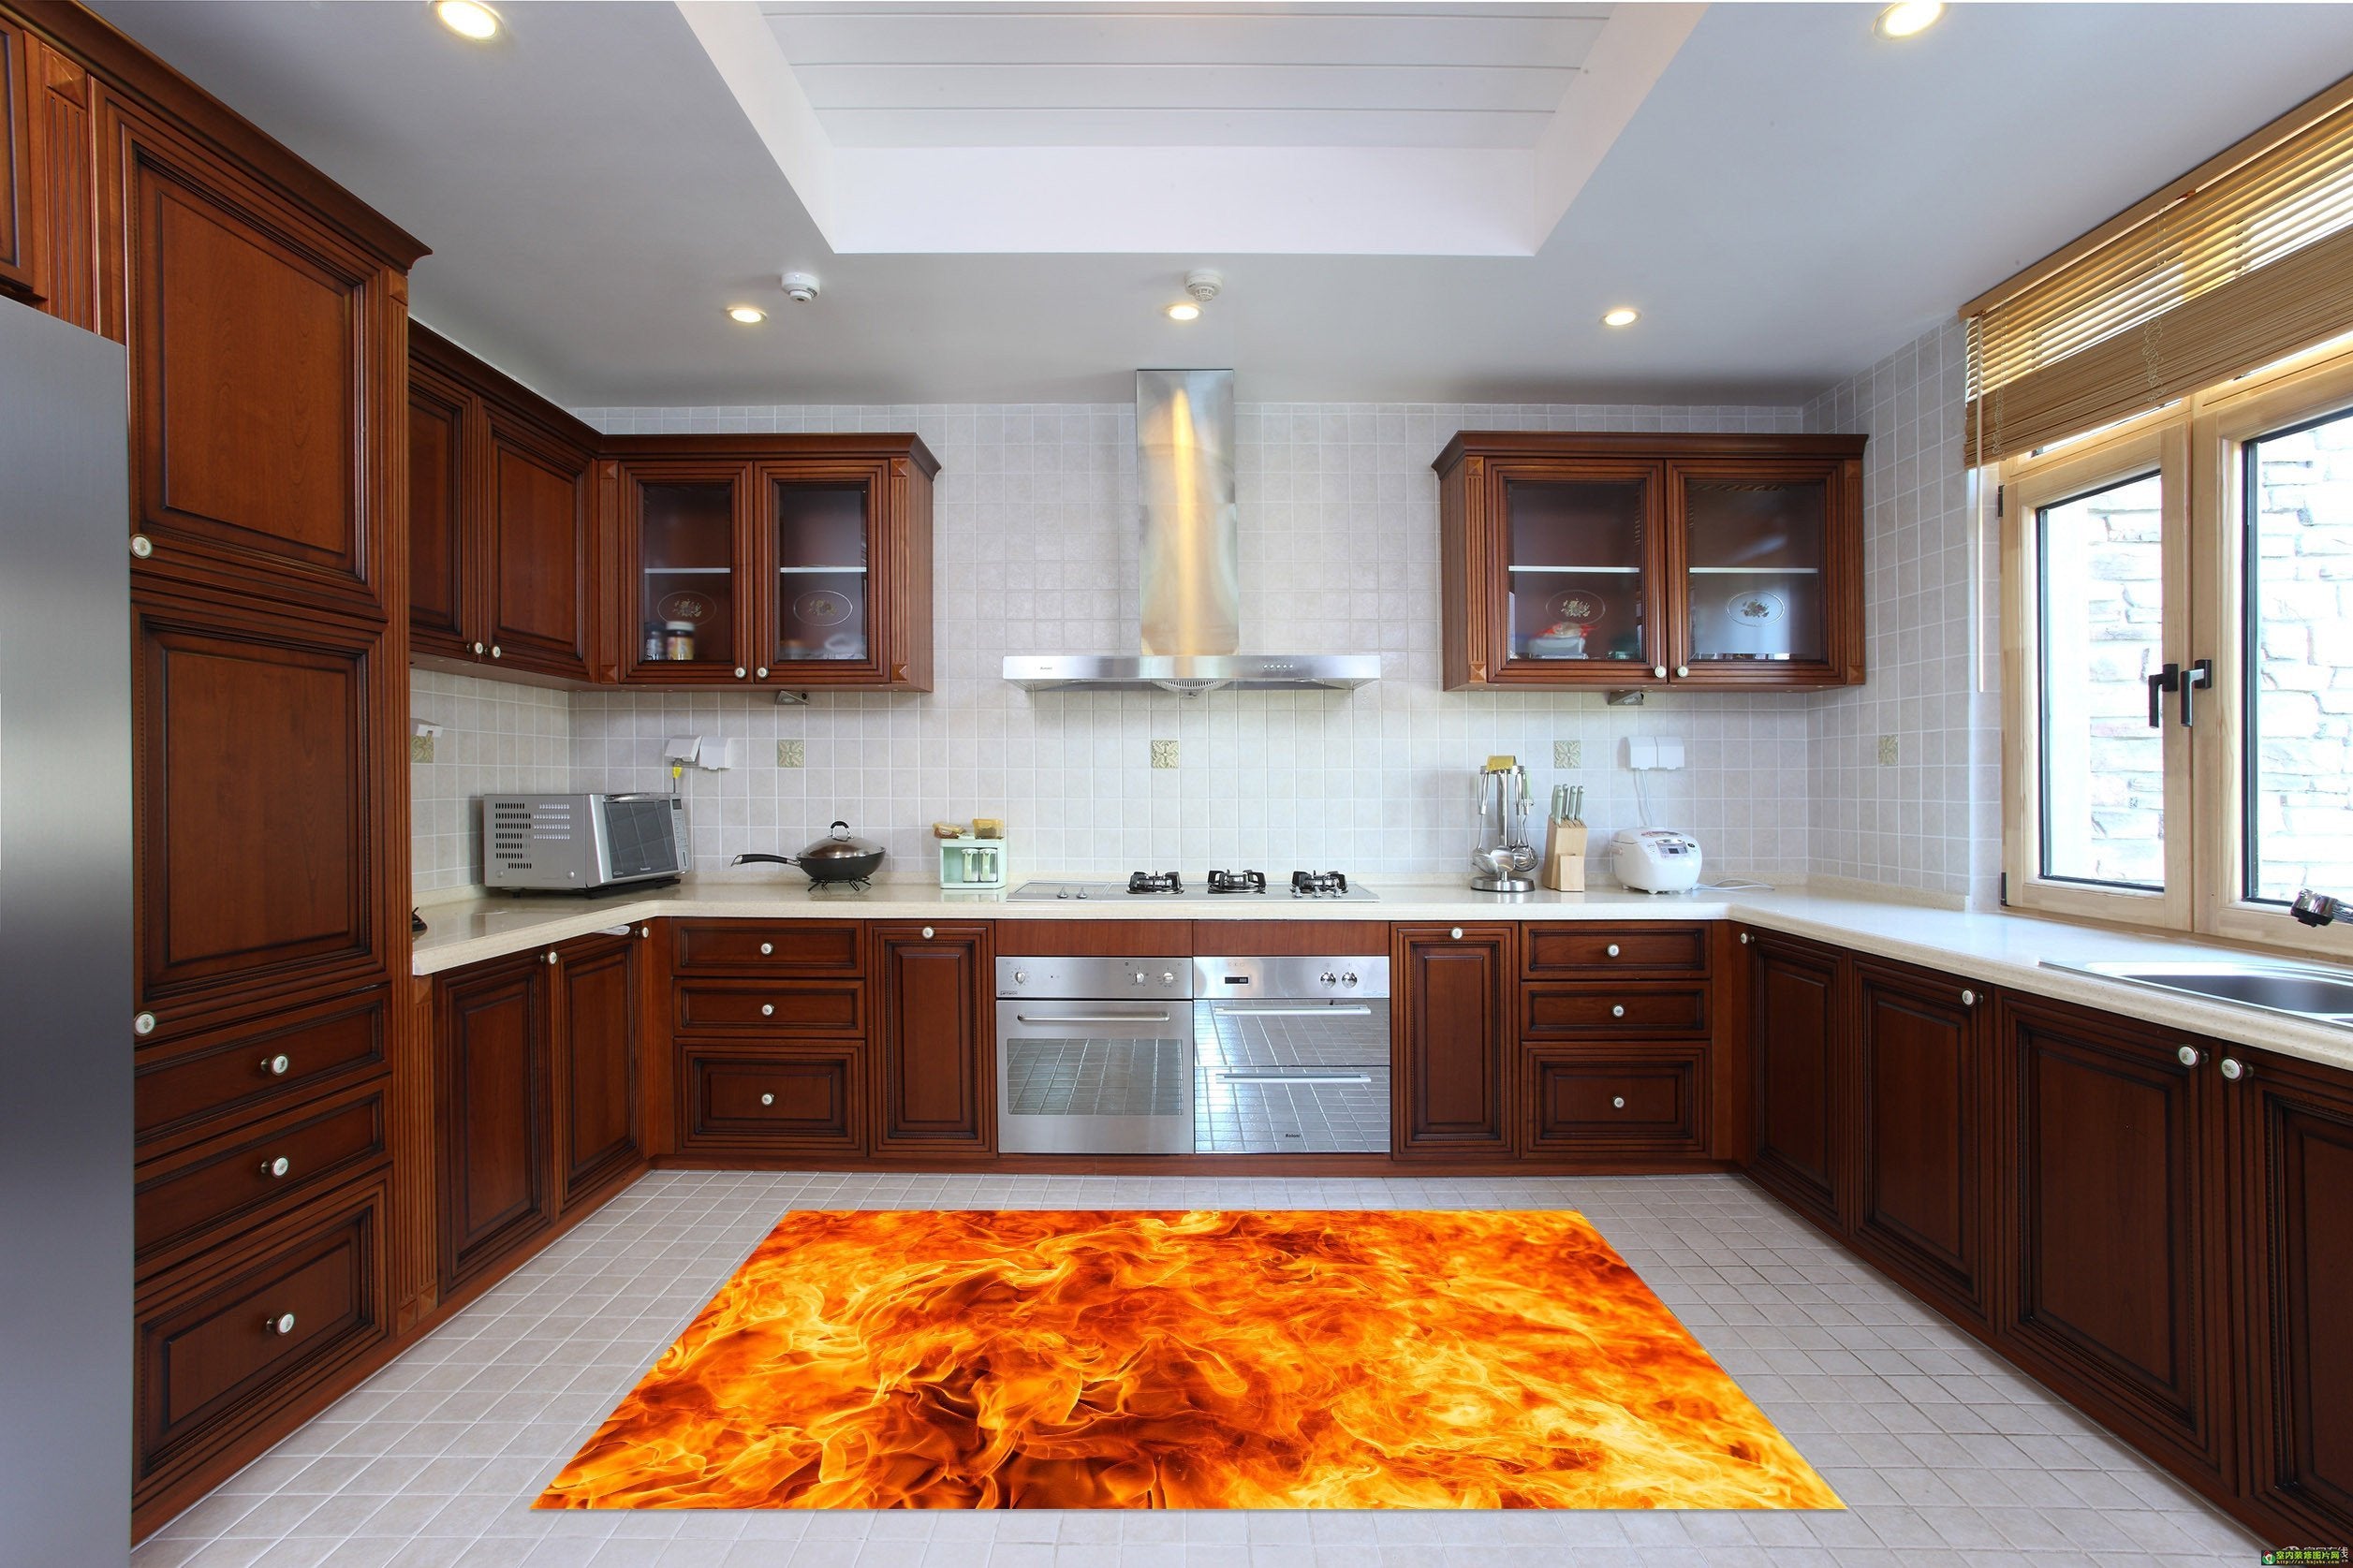 3D Burning Flame Kitchen Mat Floor Mural Wallpaper AJ Wallpaper 